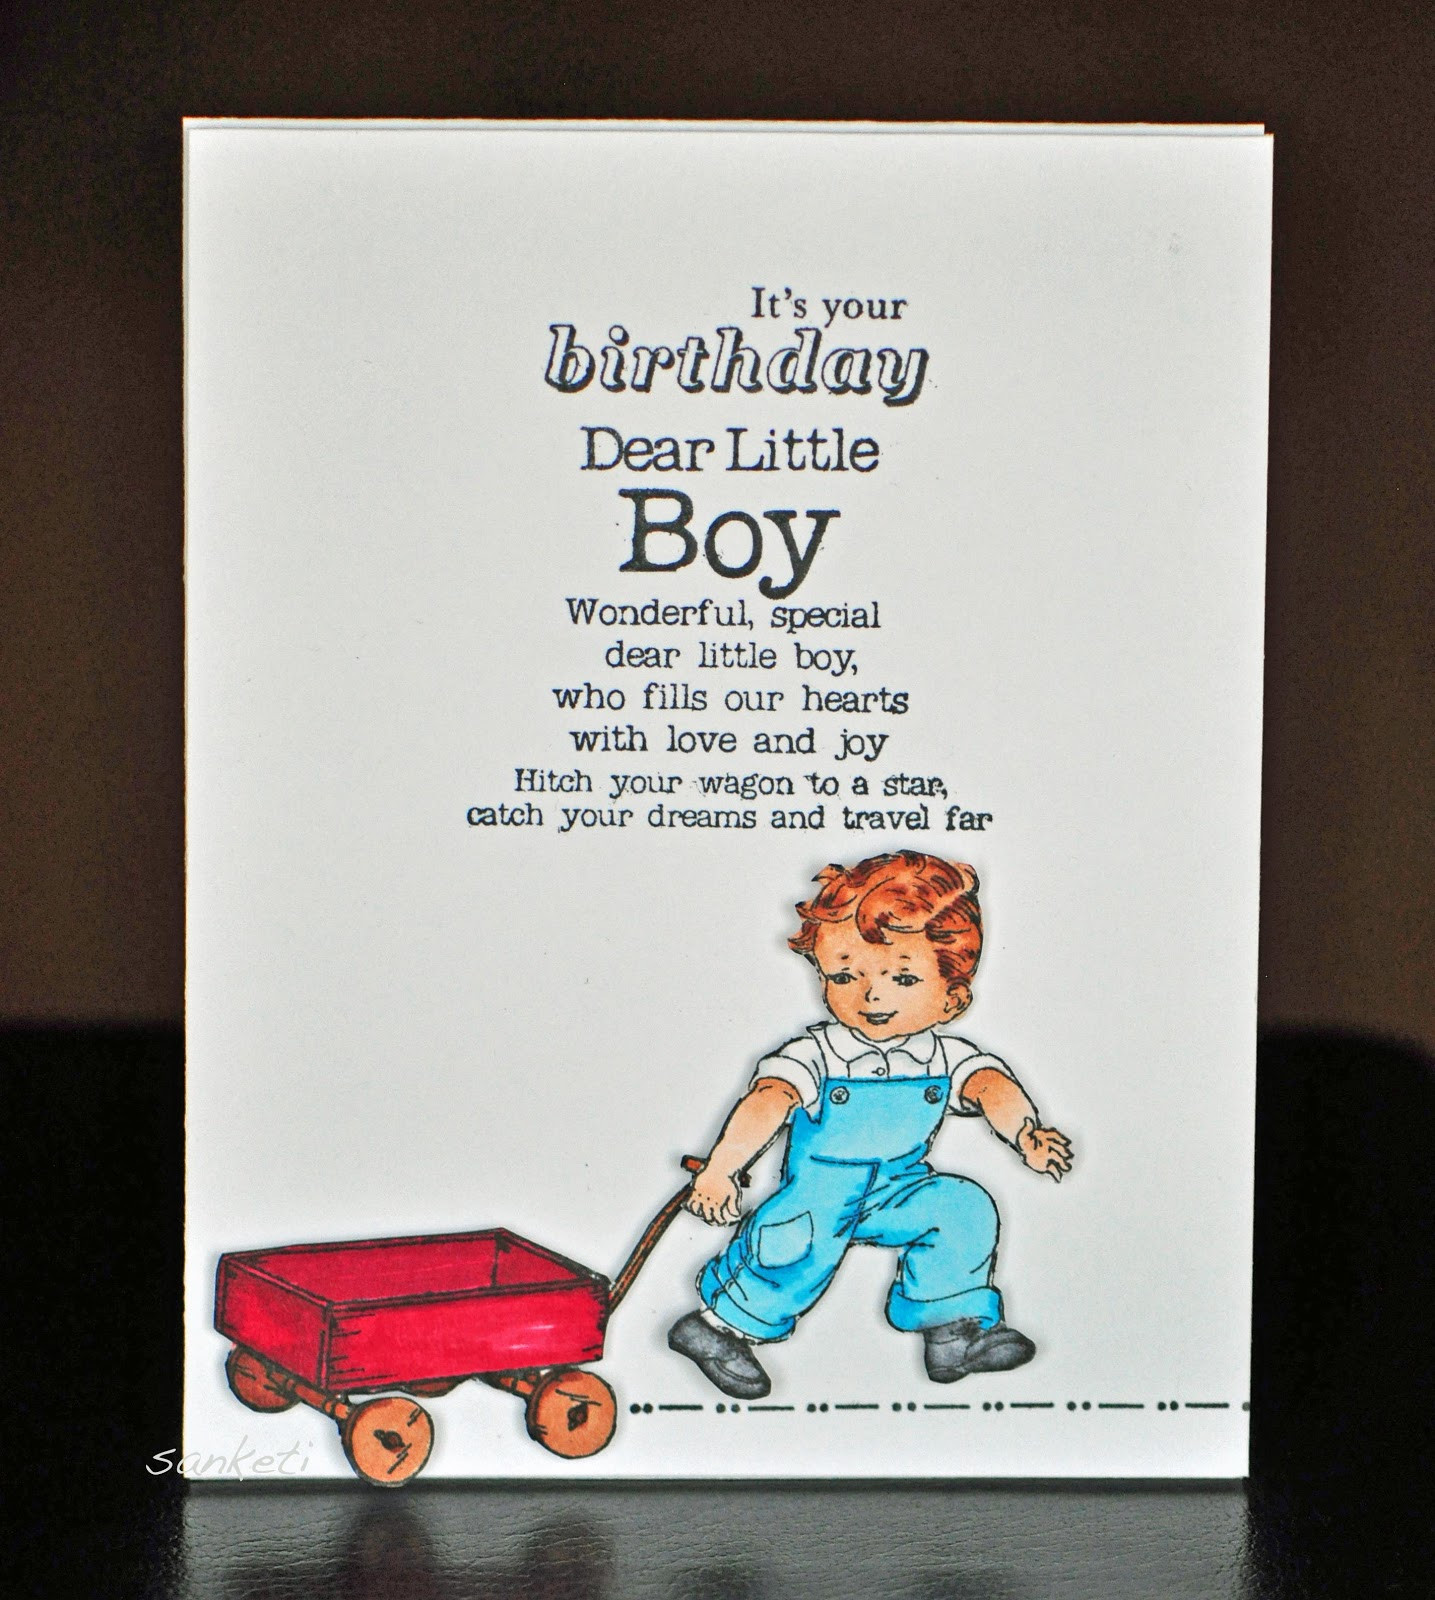 Boy Birthday Quotes
 The Storyteller Dear Little Boy